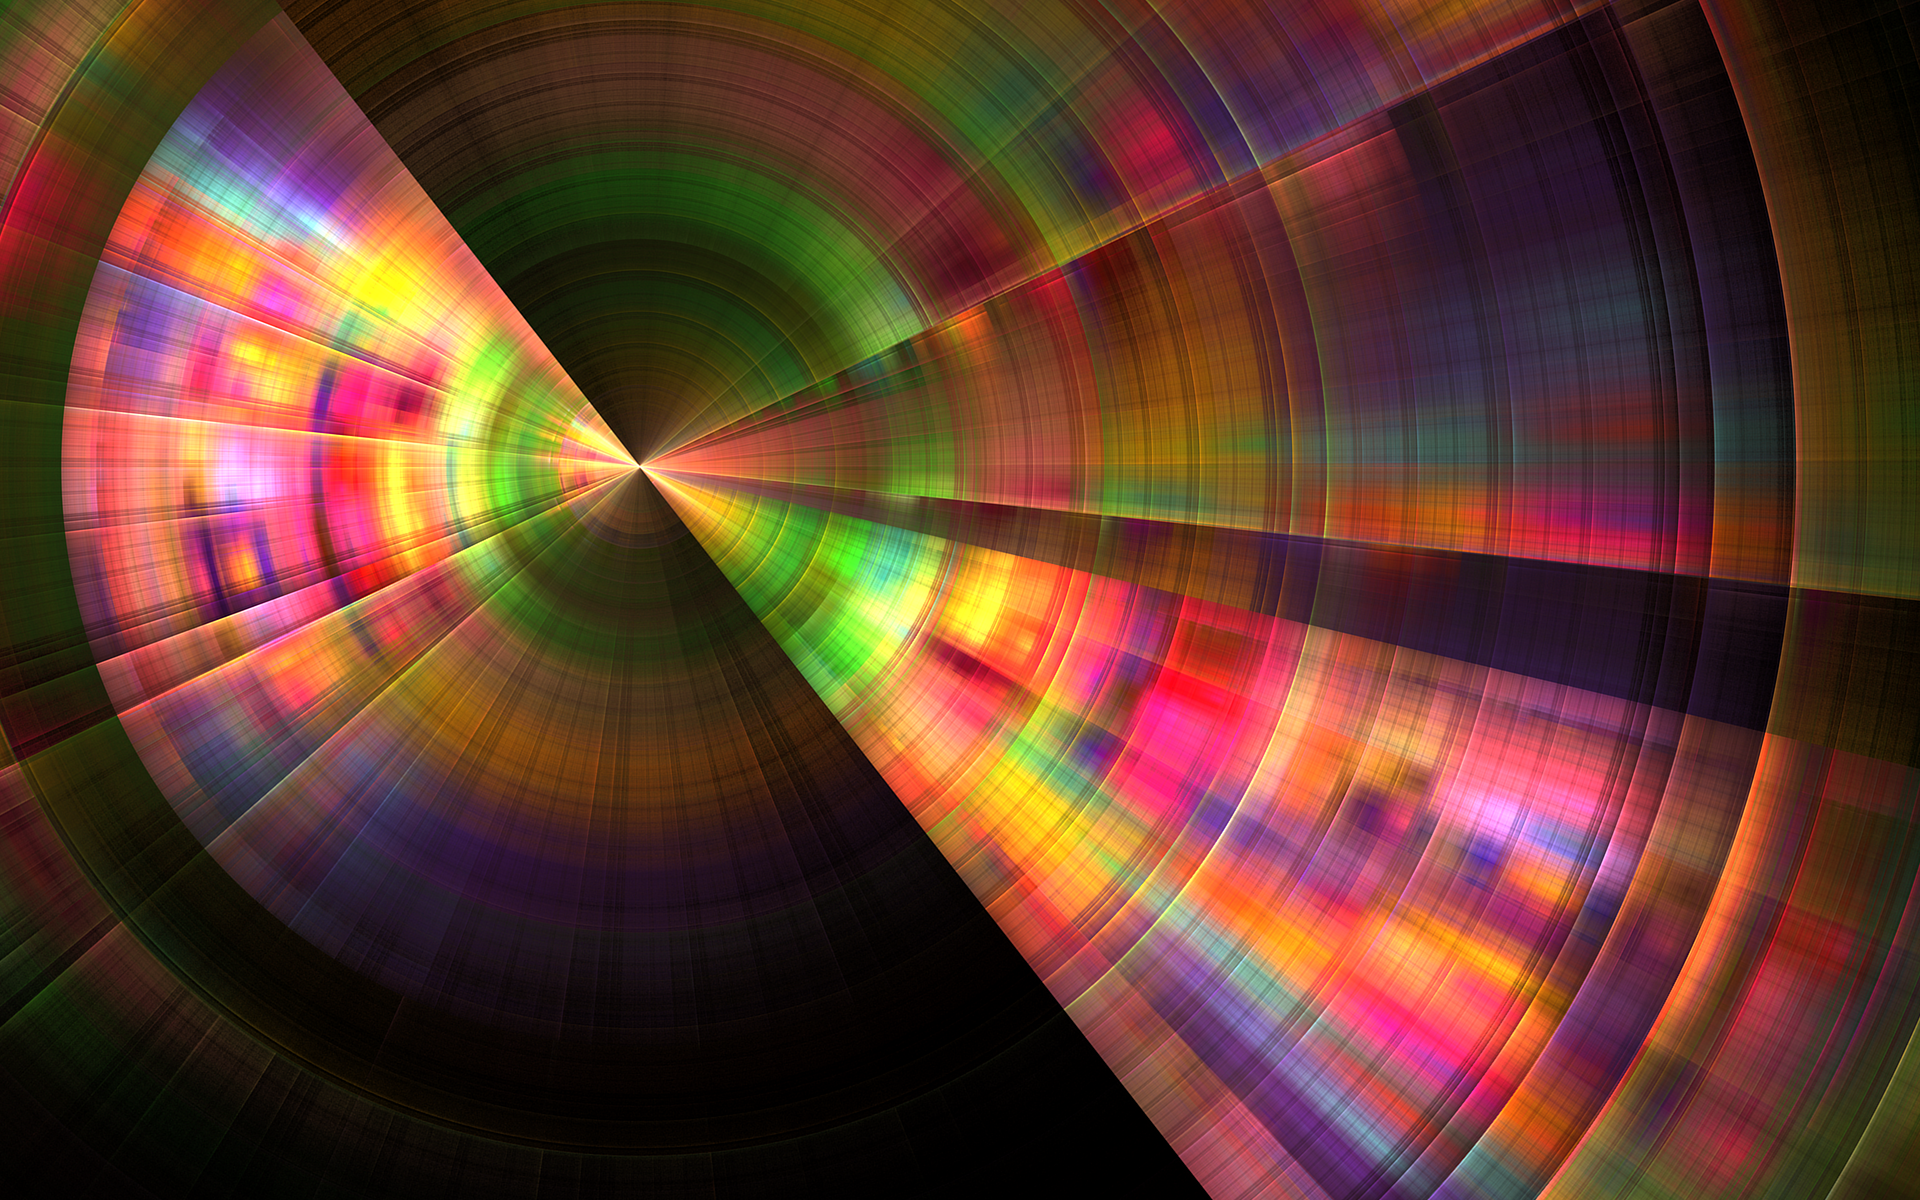 Spinning Spectrum by SaTaNiA on DeviantArt